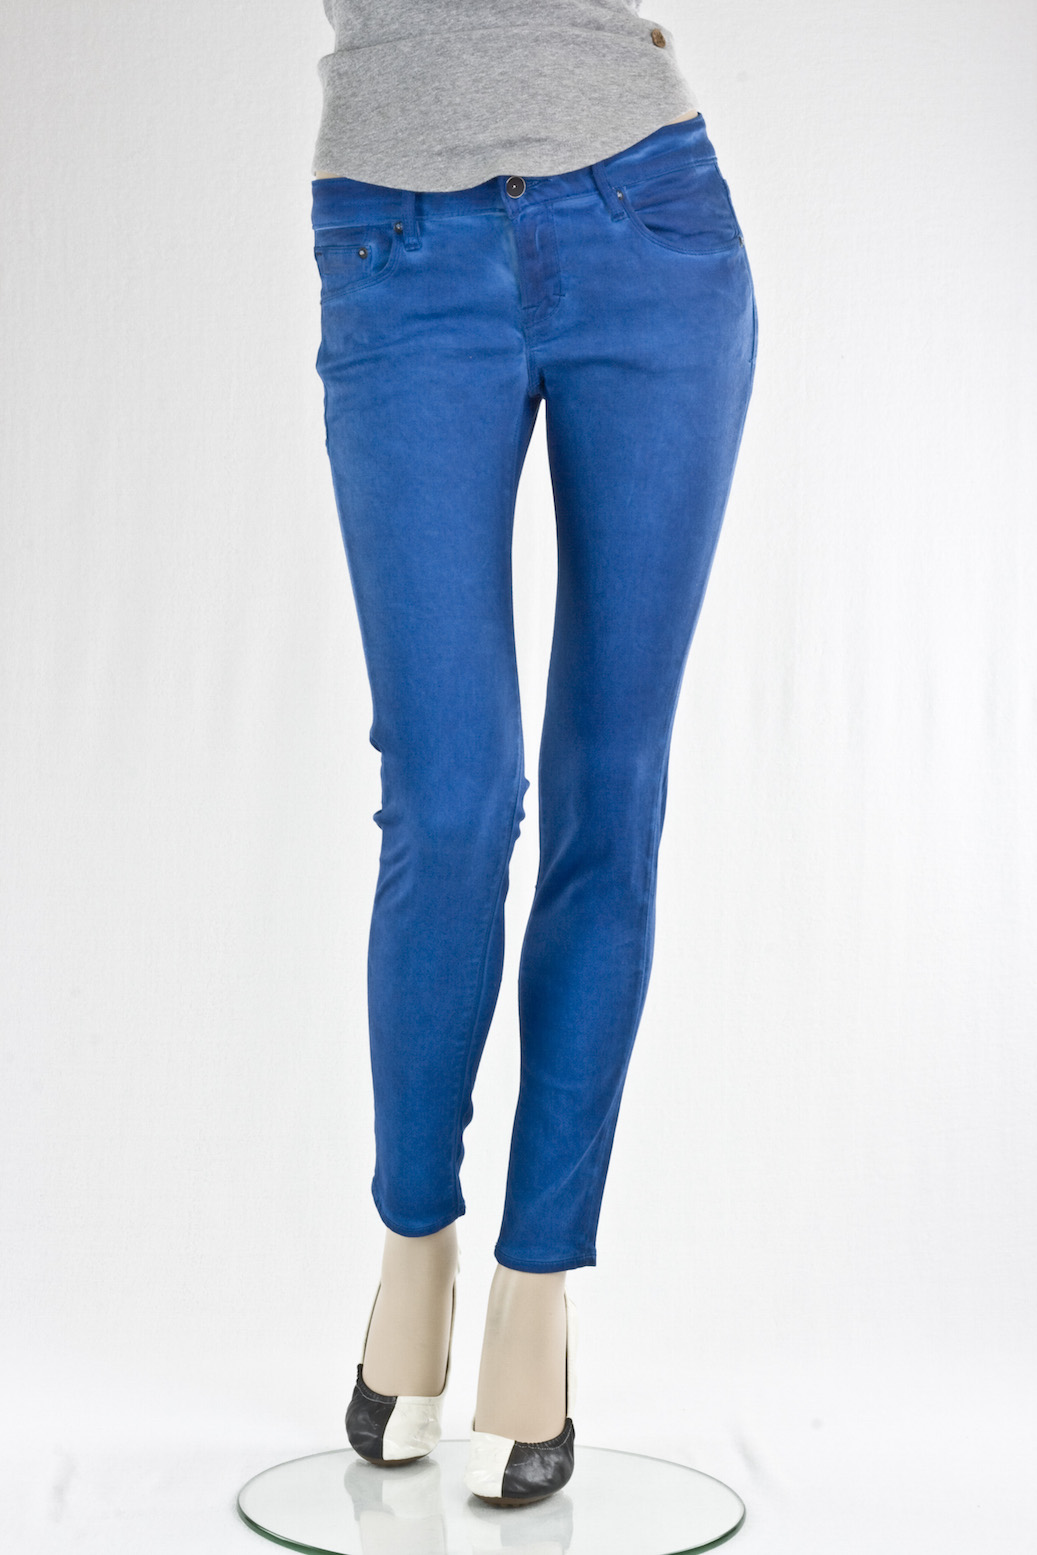 Женские джинсы Cult of individuality "Скини" Royal teaser skinny jeans интернет-магазин Fashion Jeans